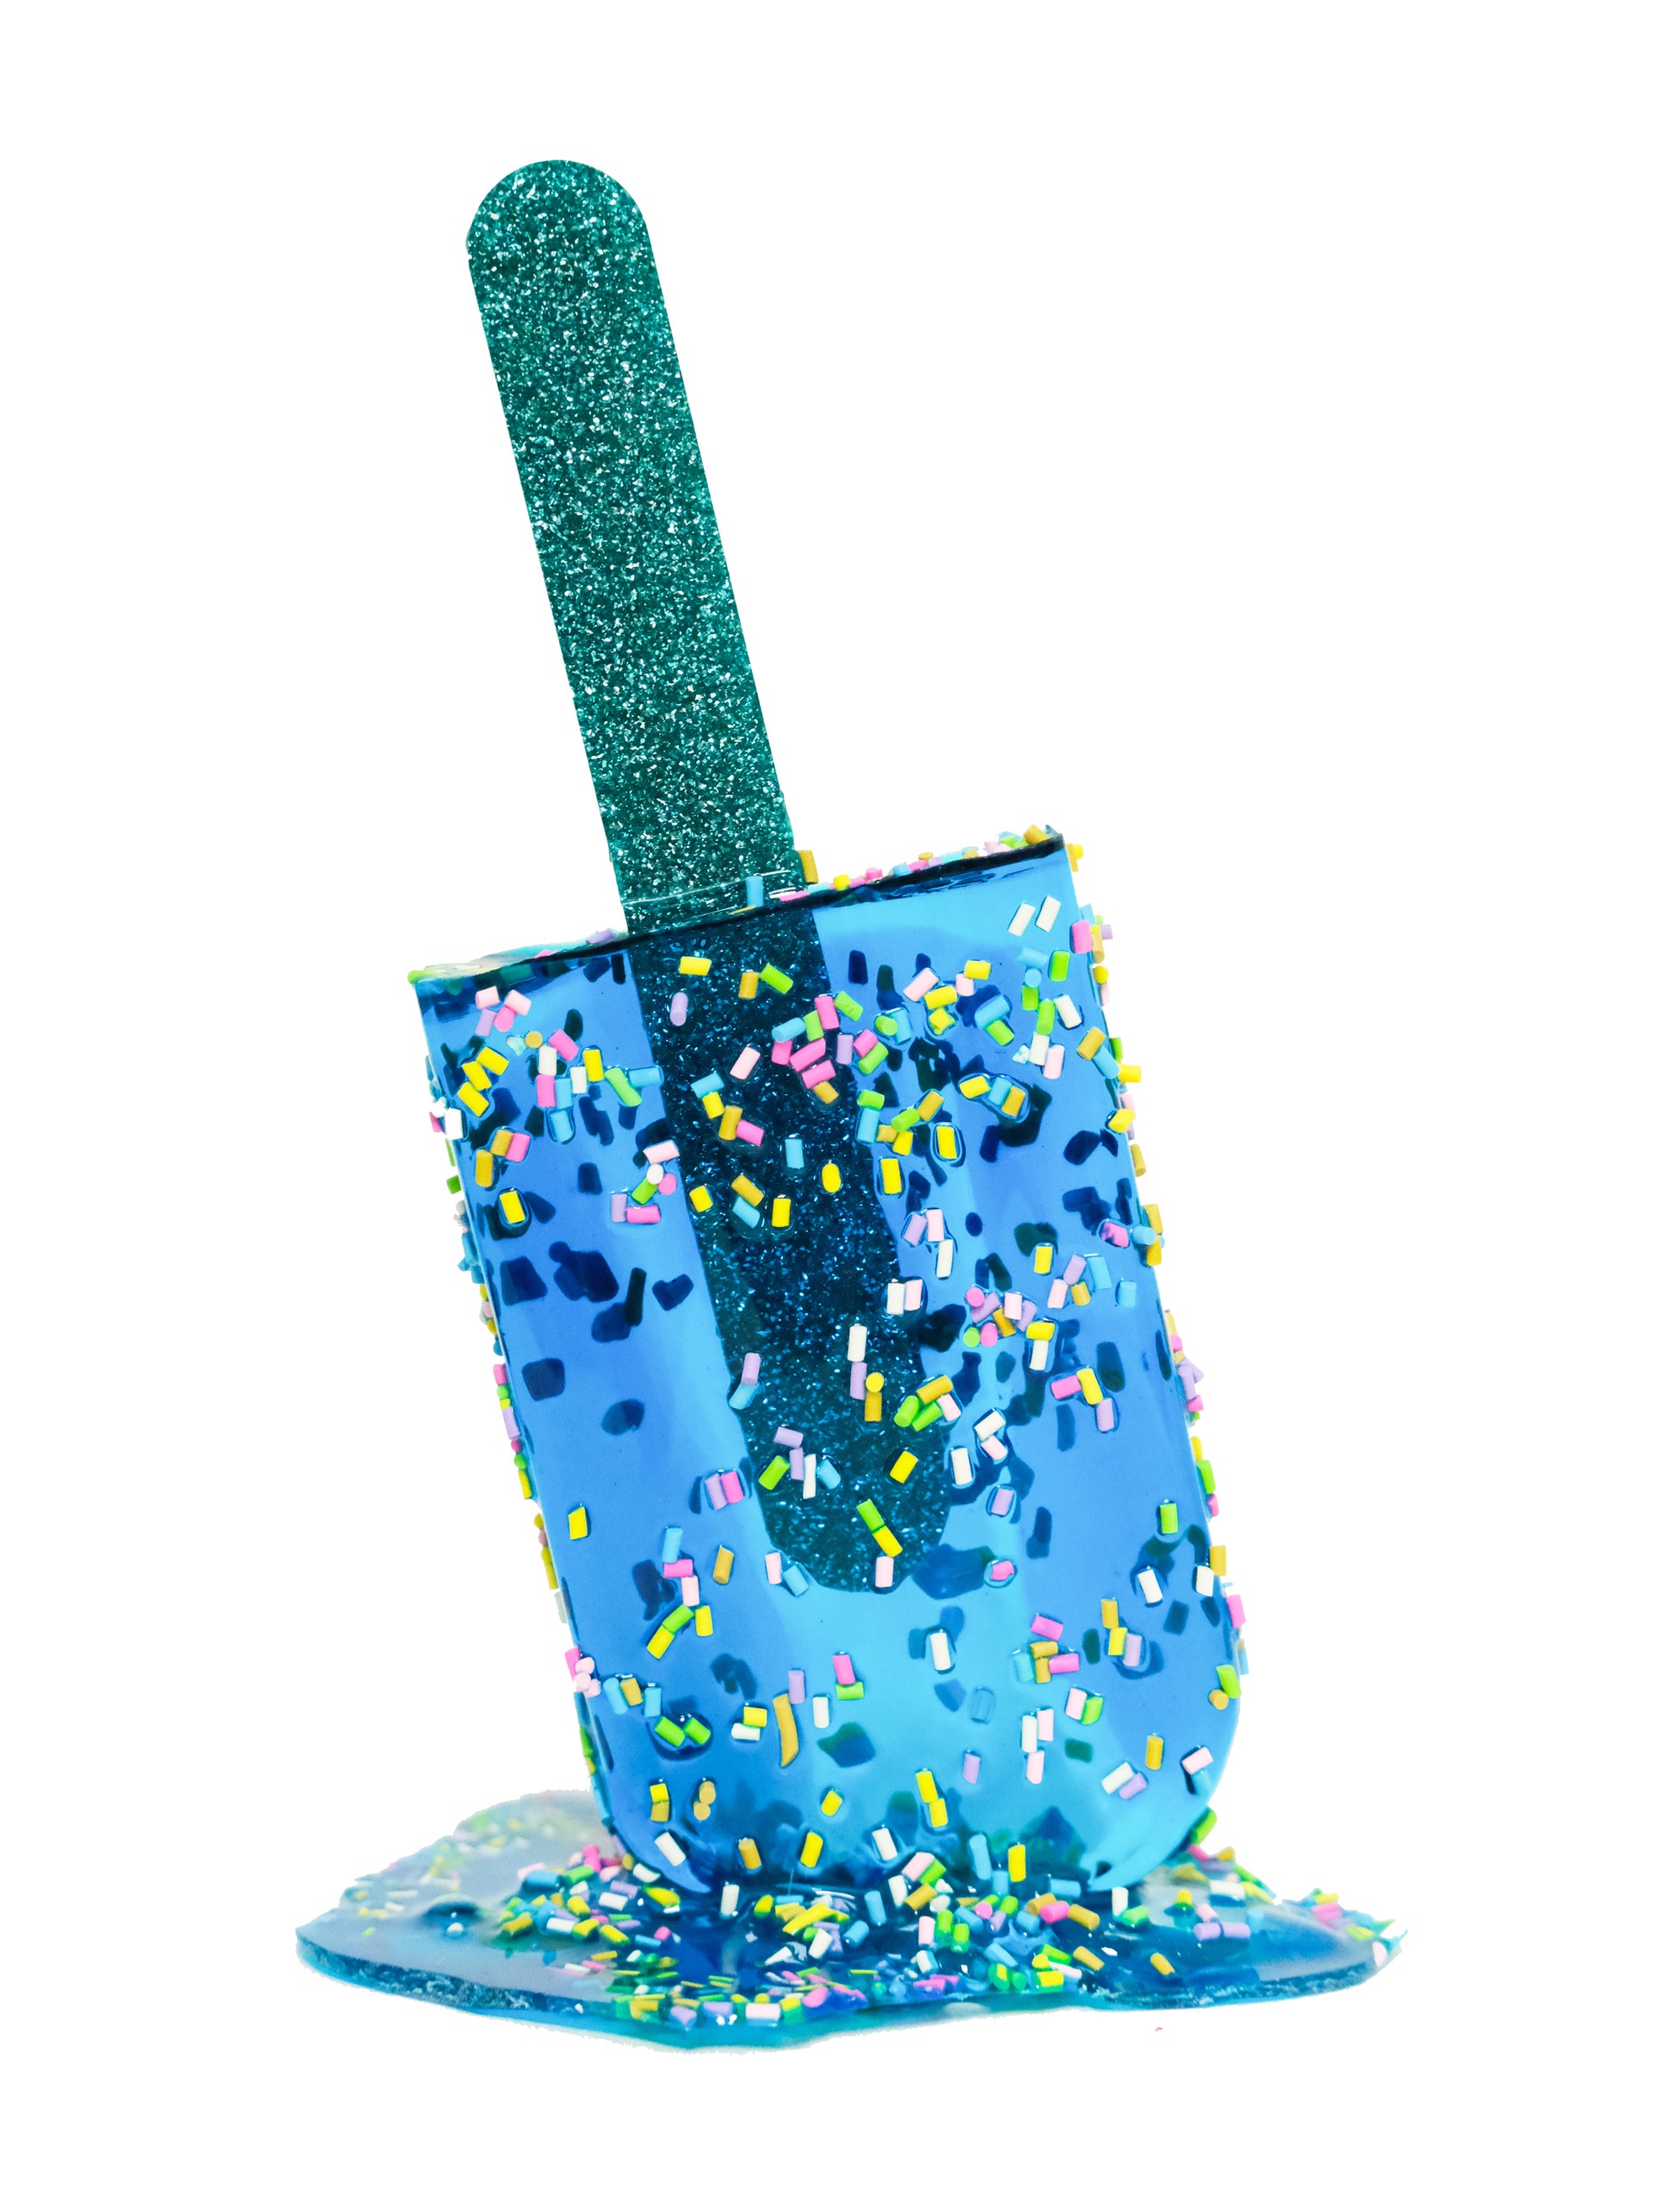 Aqua Sprinkle Pop by Betsy Enzensberger